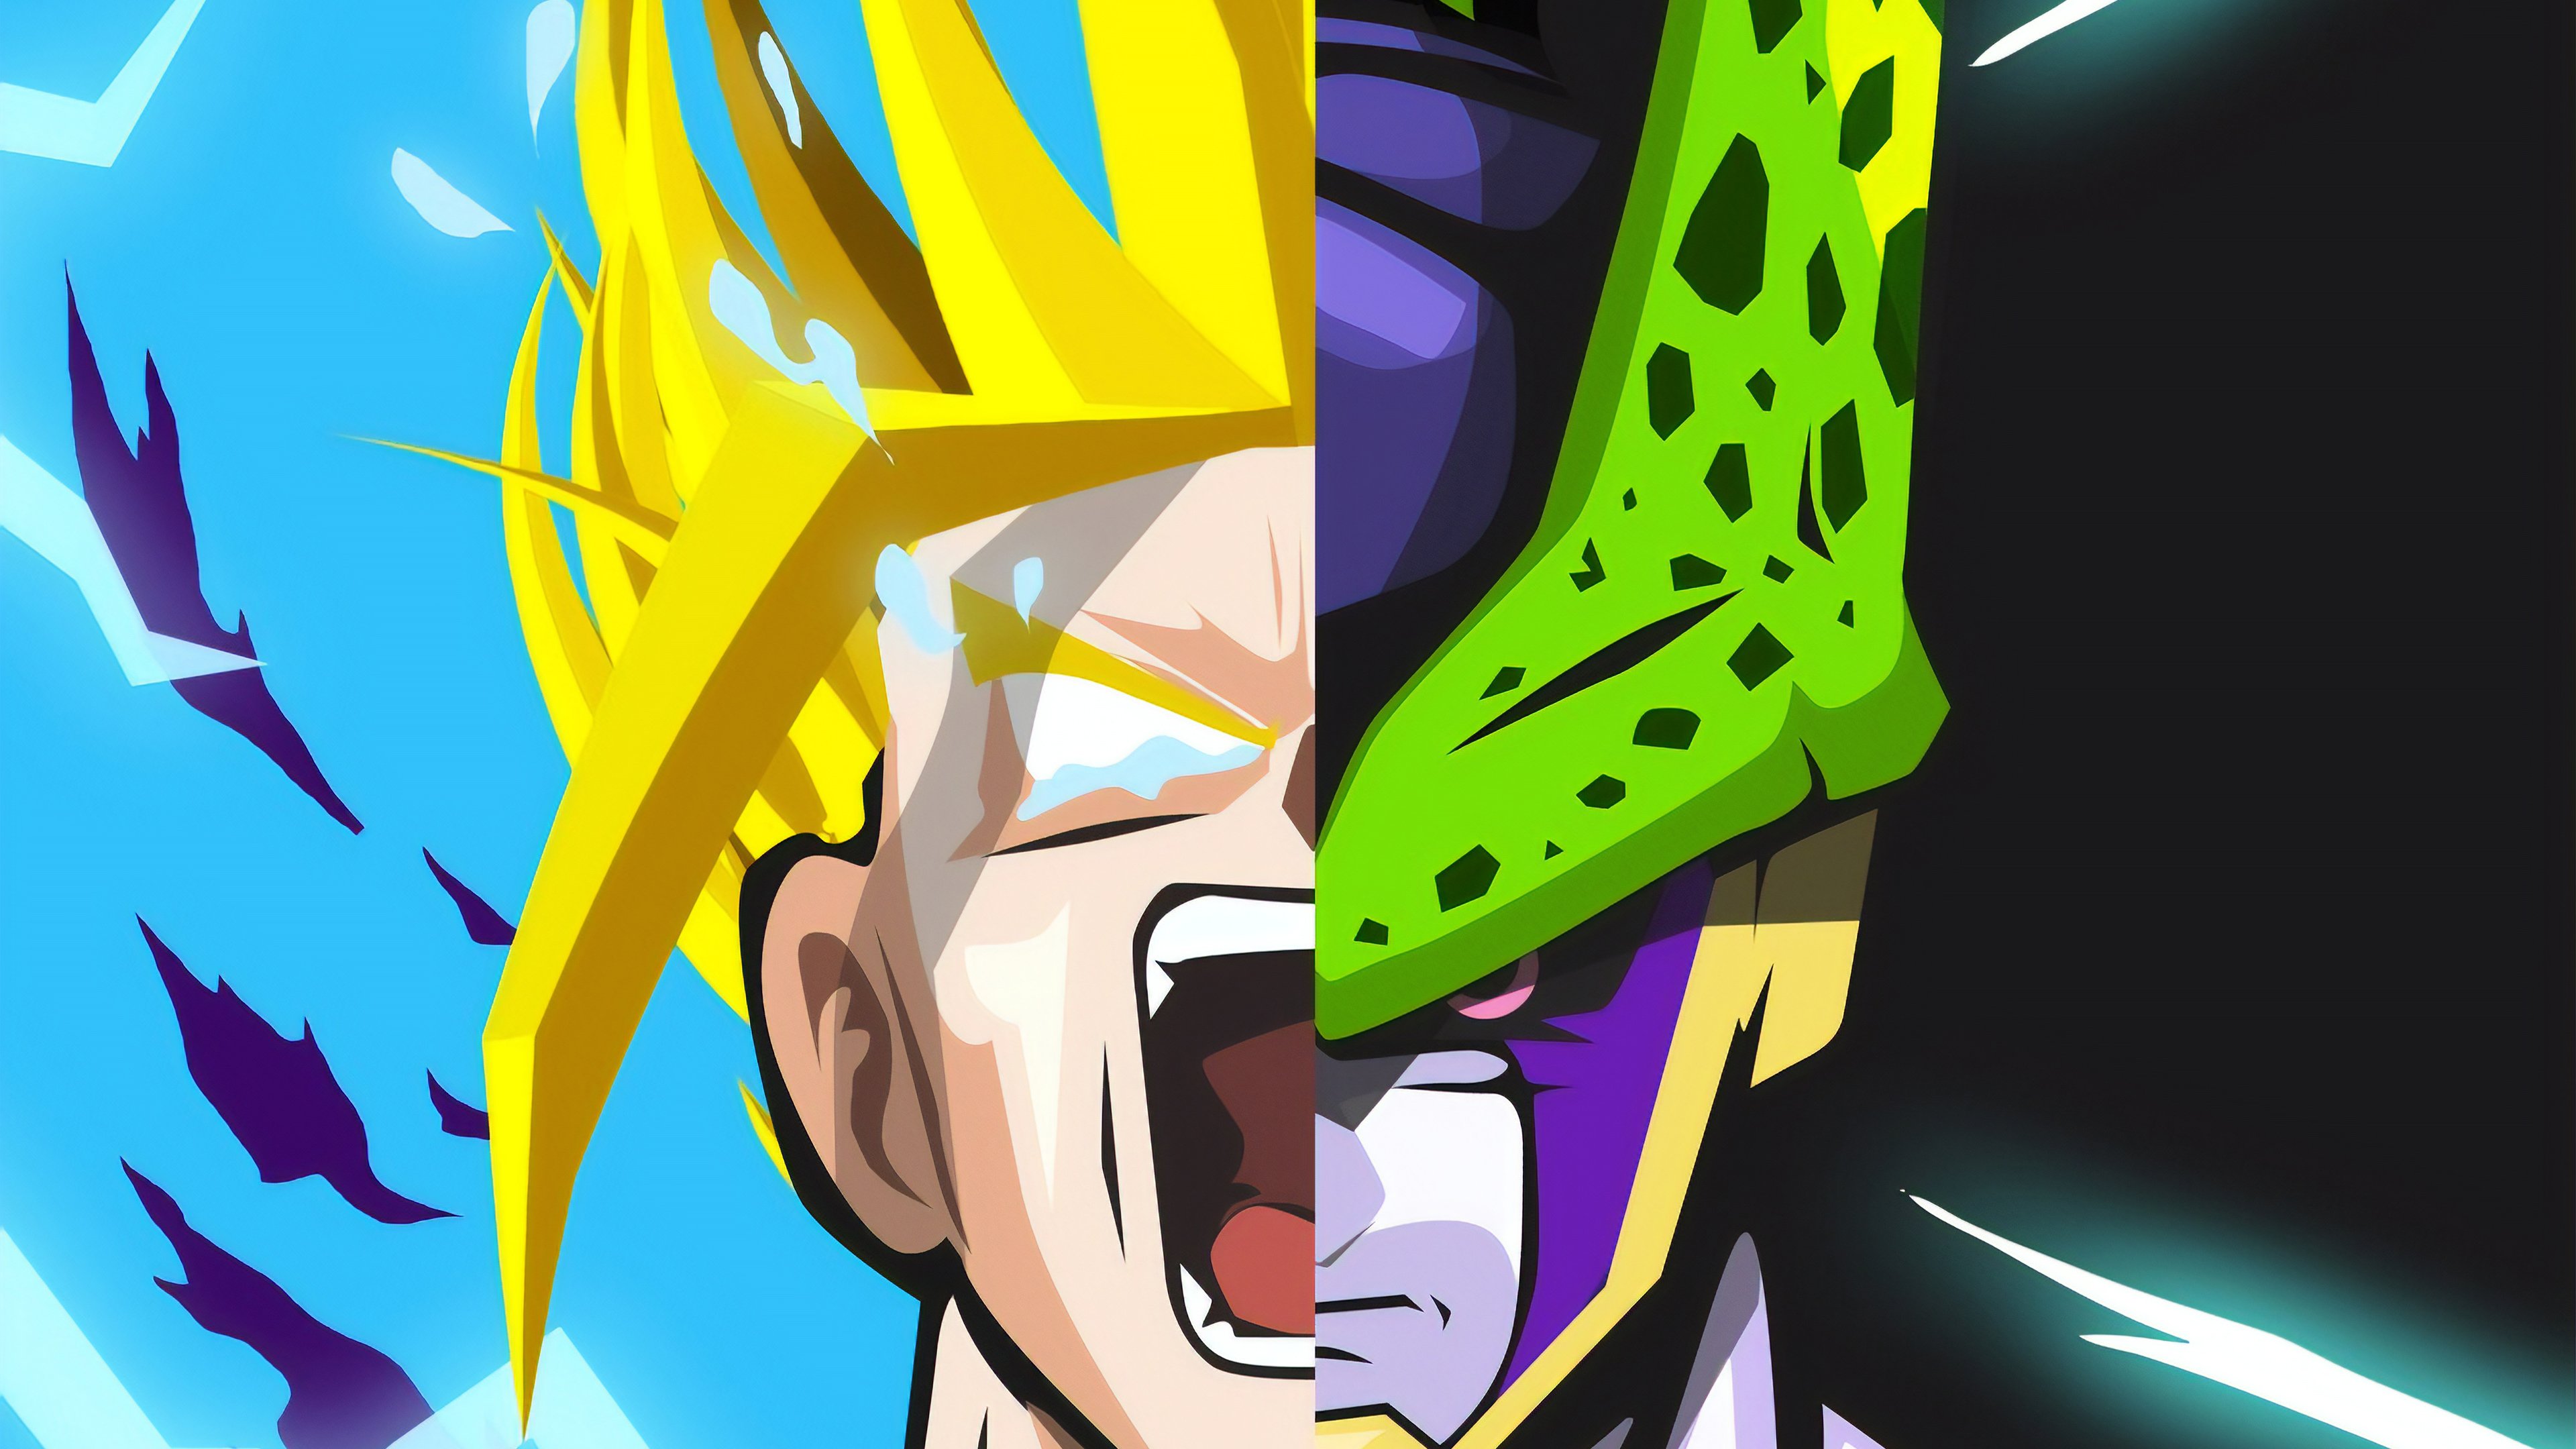 Anime Wallpaper Goku and Cell from Dragon Ball